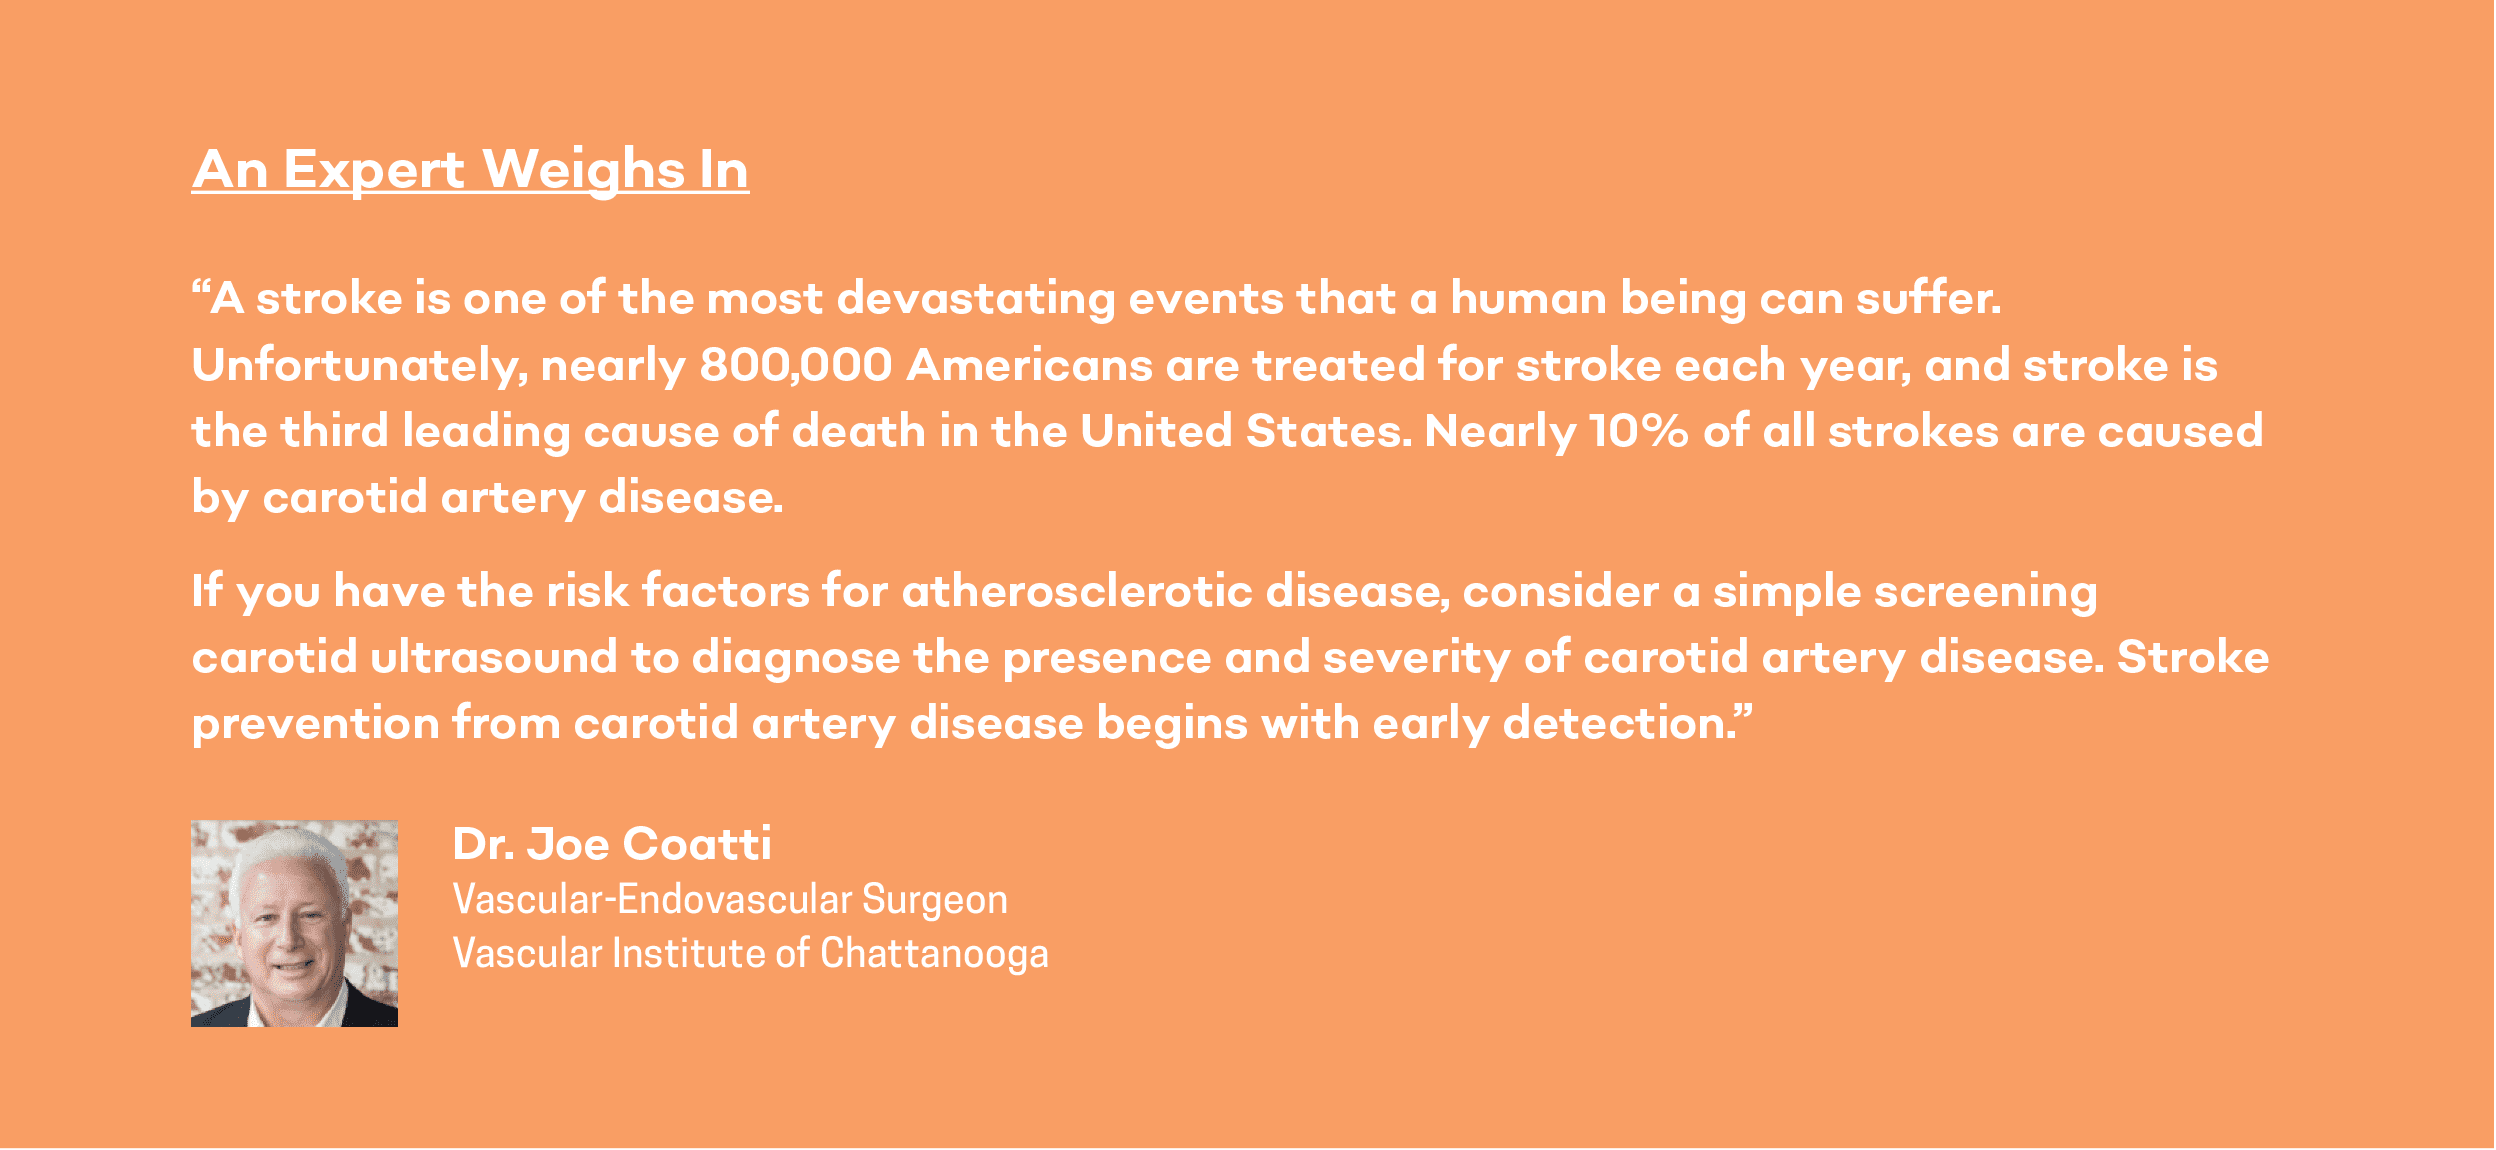 carotid artery disease expert opinion in chattanooga dr. joe coatti